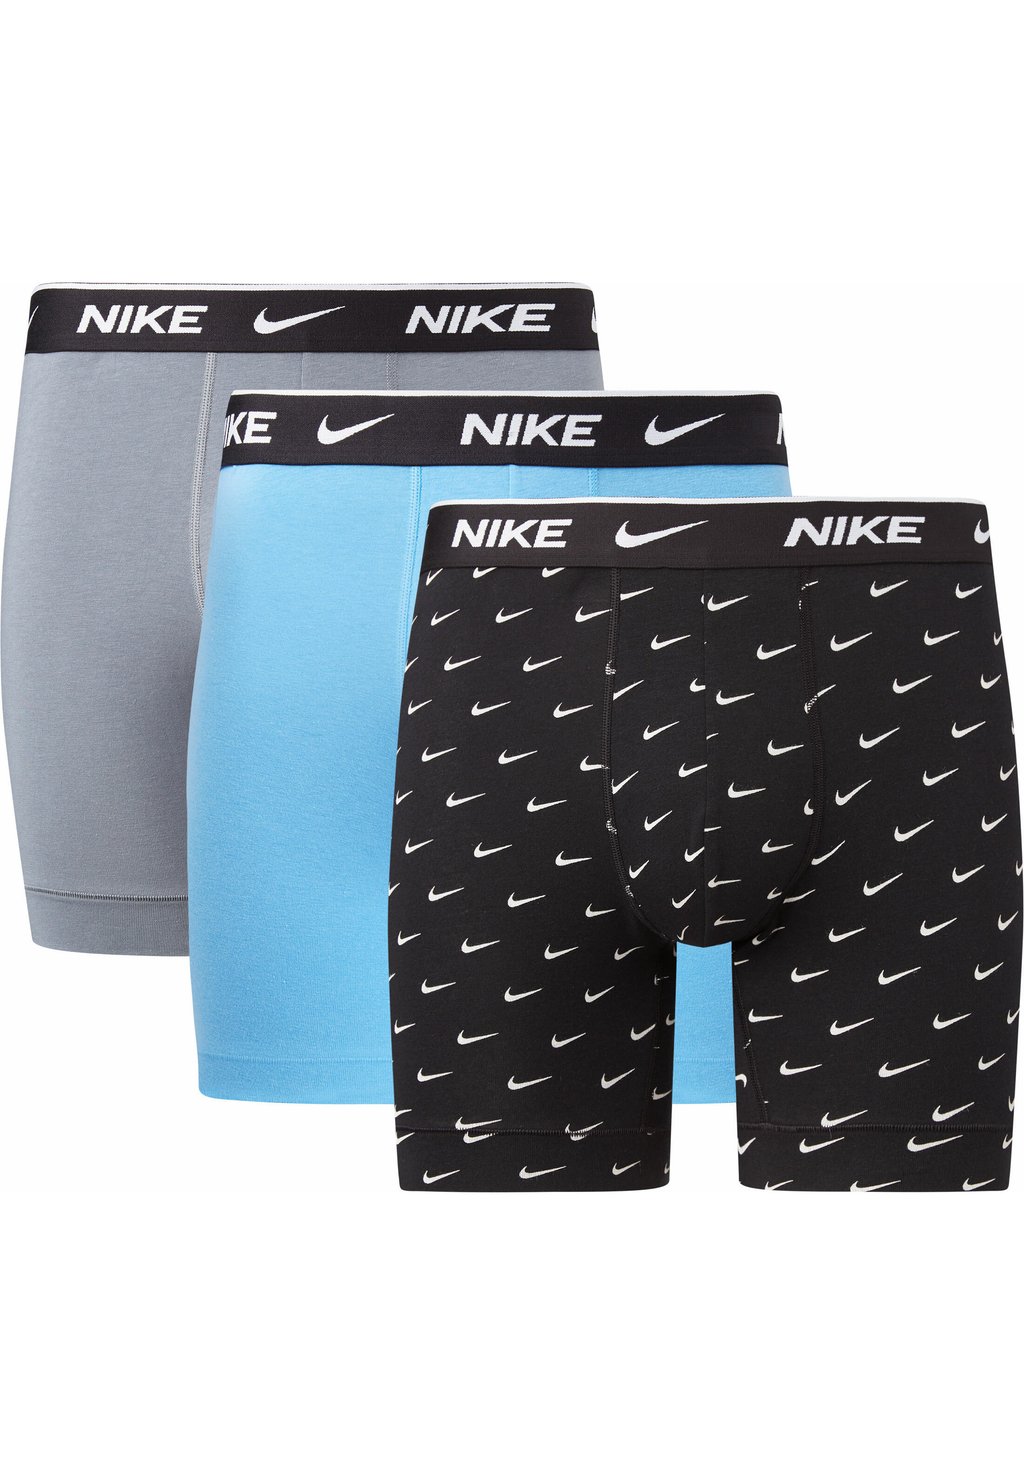 Трусики BRIEF 3 PACK Nike Underwear, цвет print/grey/uni blue